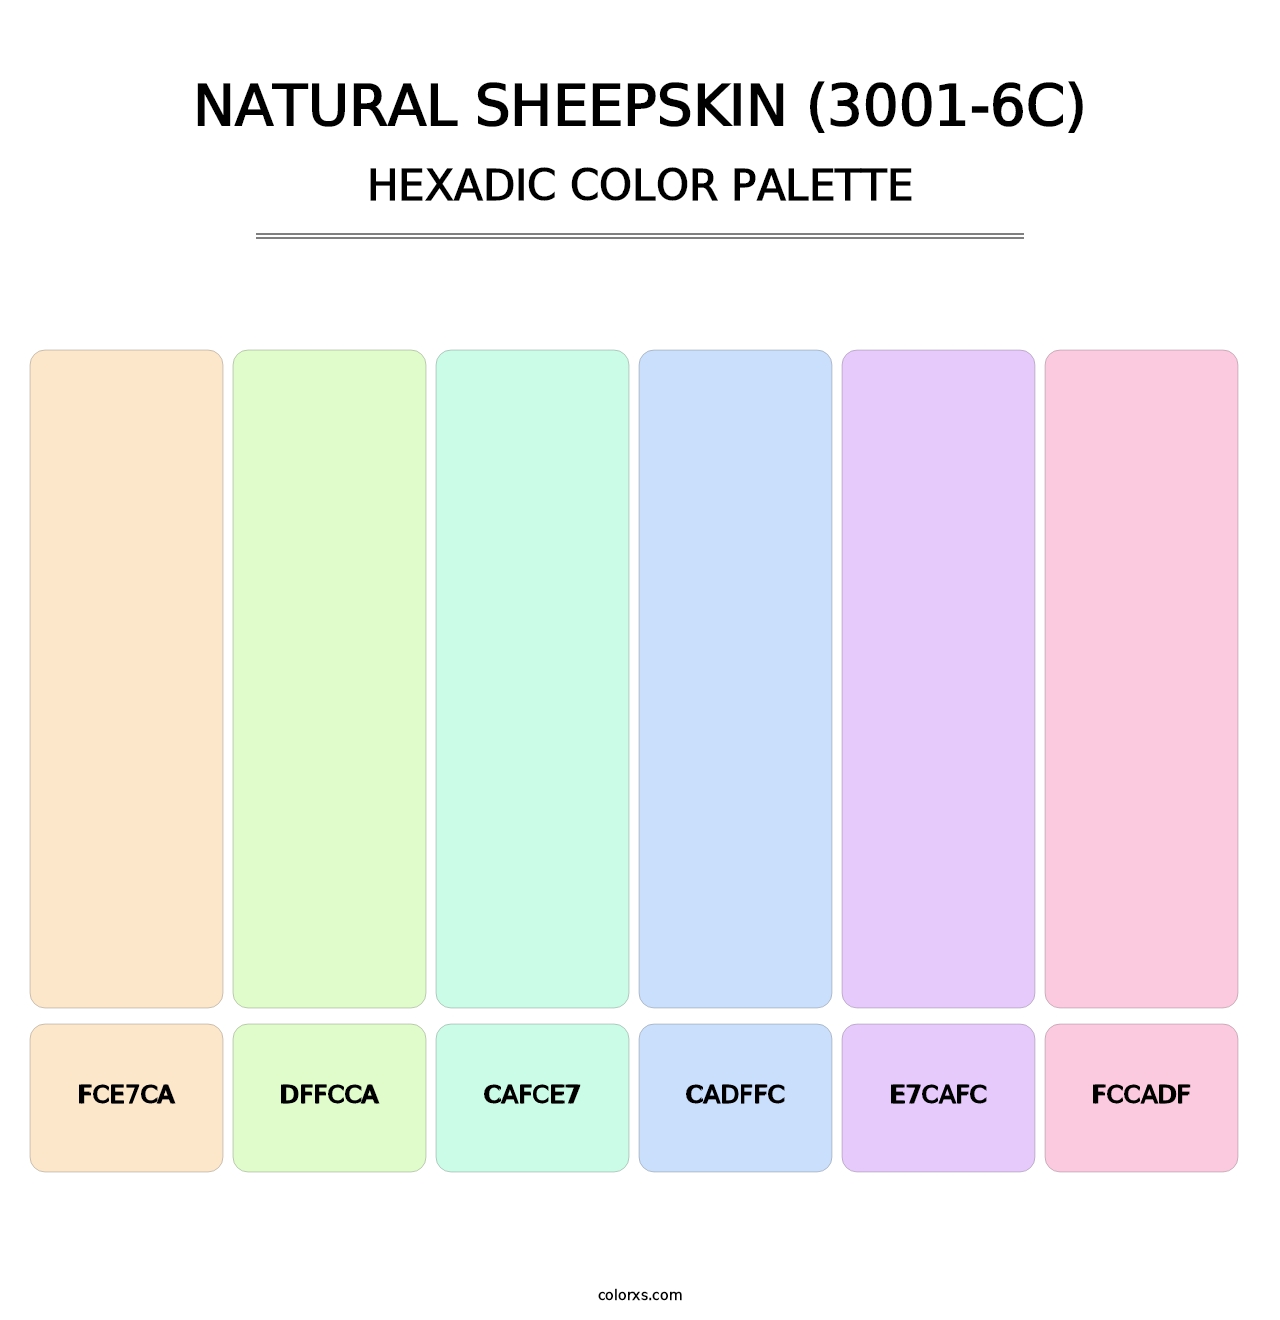 Natural Sheepskin (3001-6C) - Hexadic Color Palette